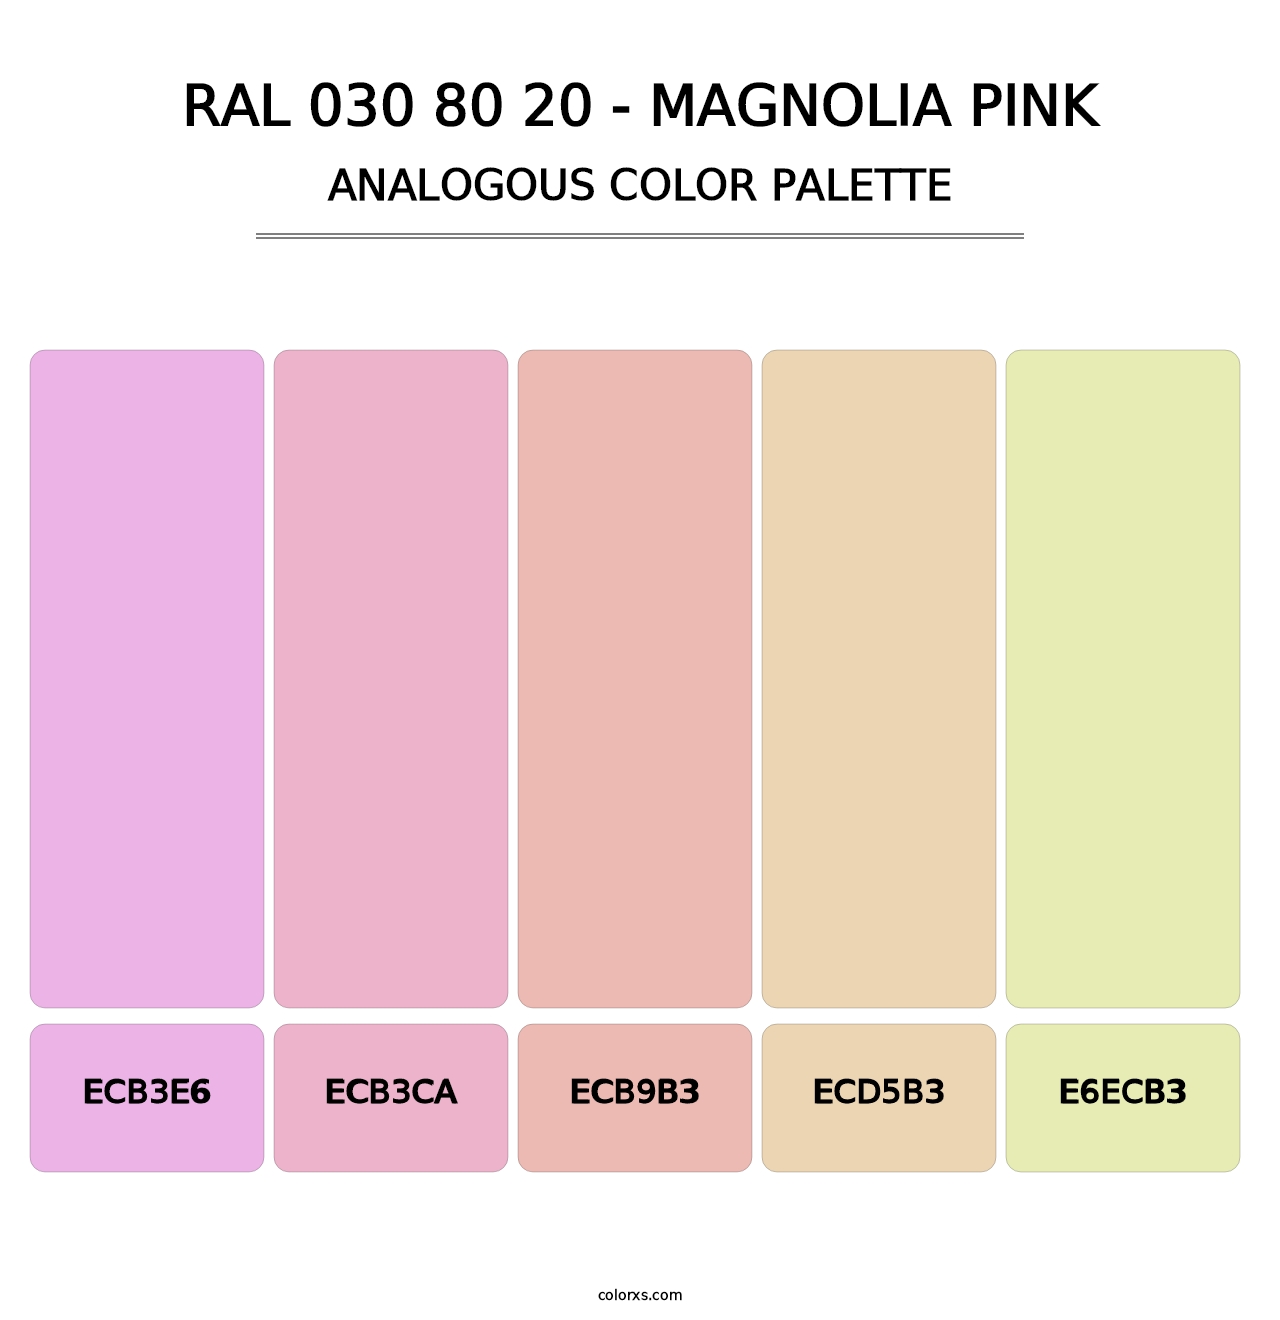 RAL 030 80 20 - Magnolia Pink - Analogous Color Palette